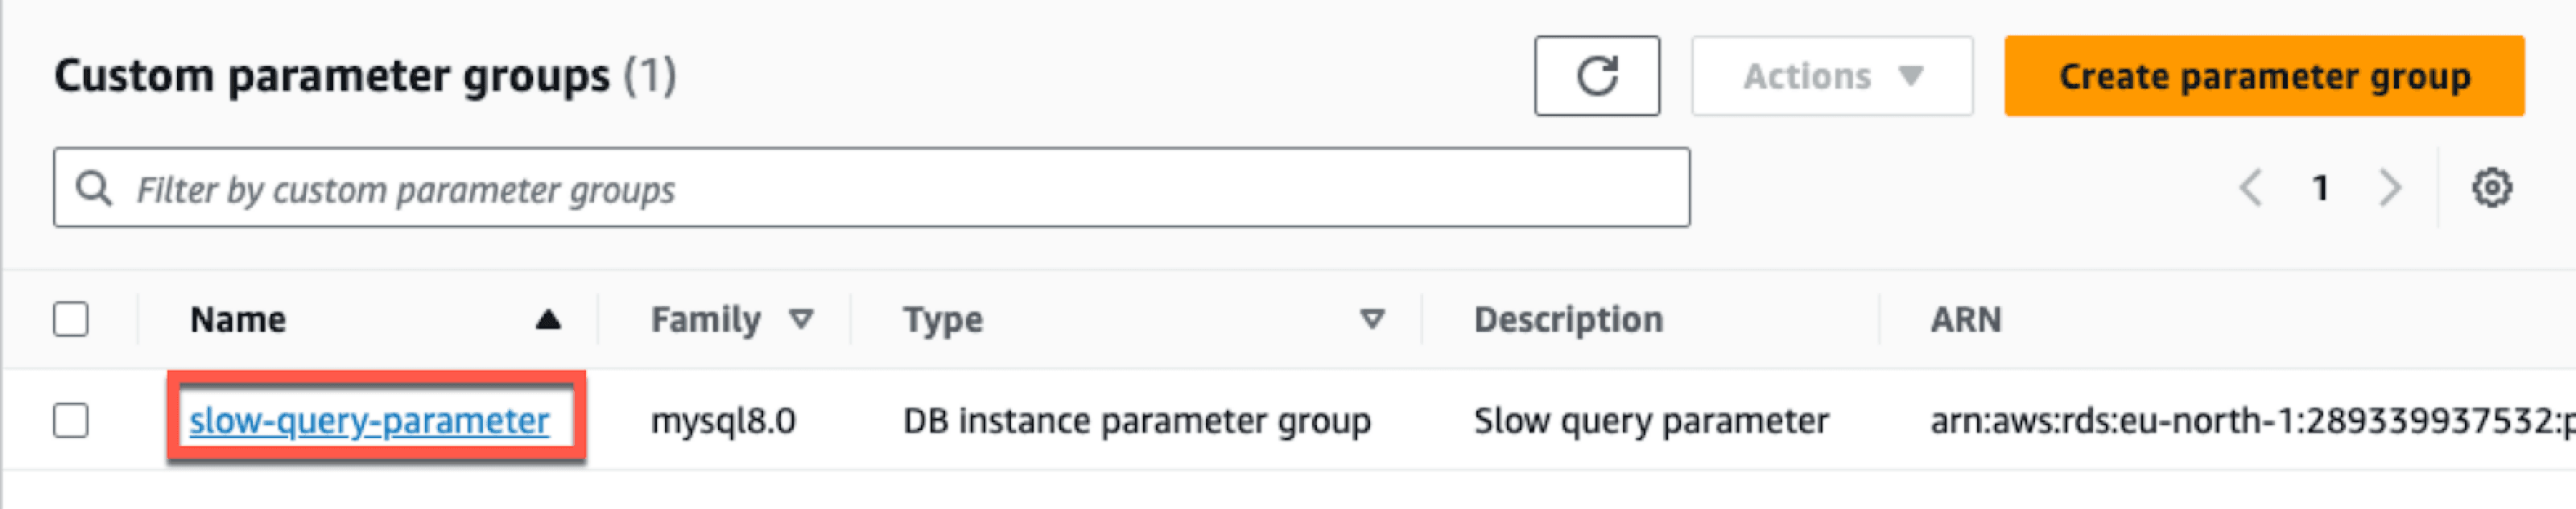 Customise parameter group